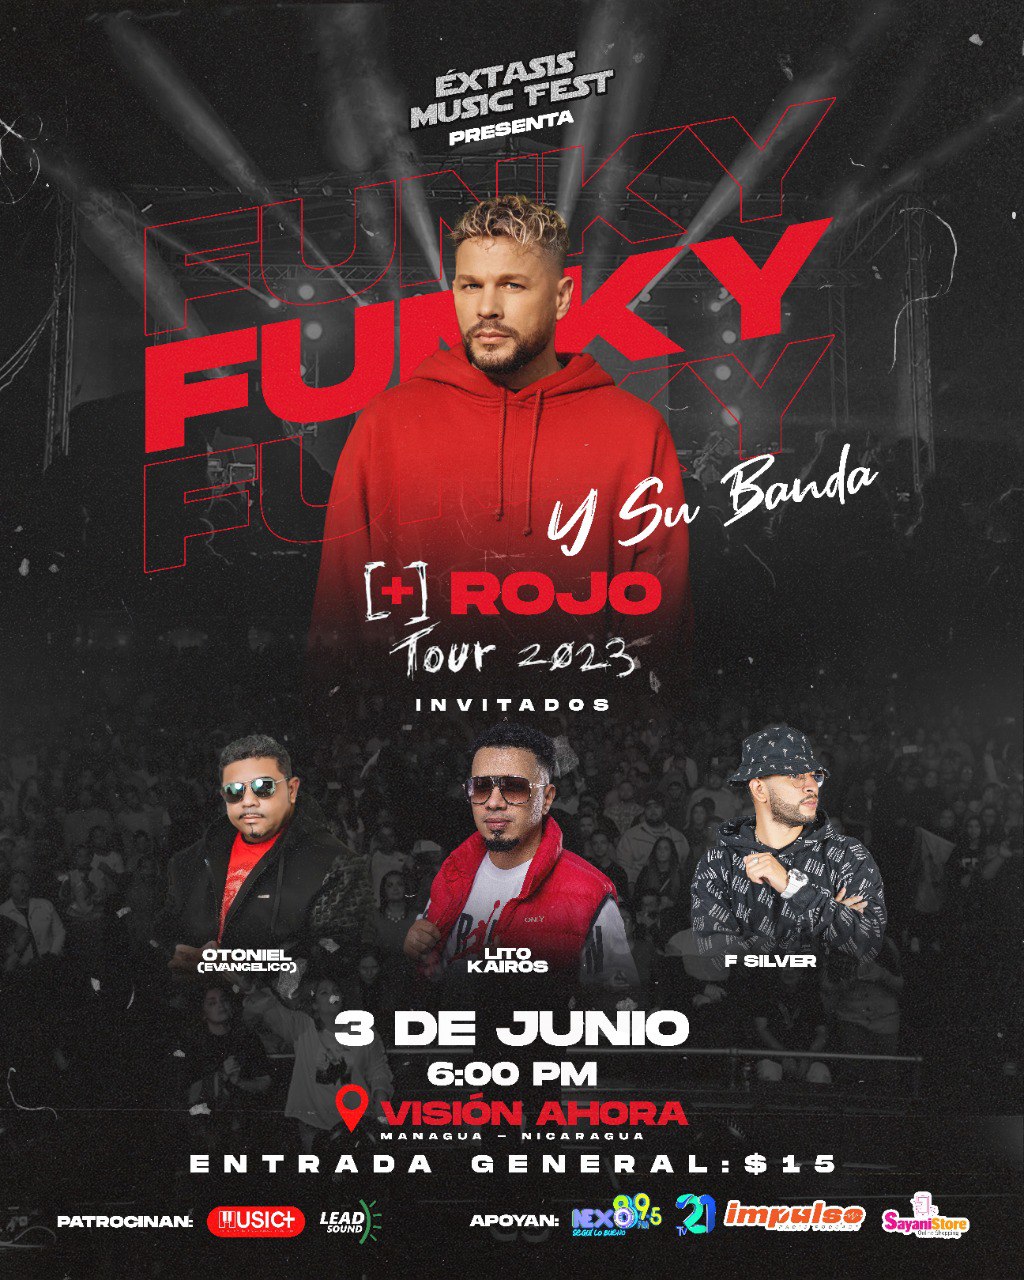 Éxtasis Music Fest Presenta Funky + Rojo Tour 2023 en Nicaragua – 3 Junio 2023